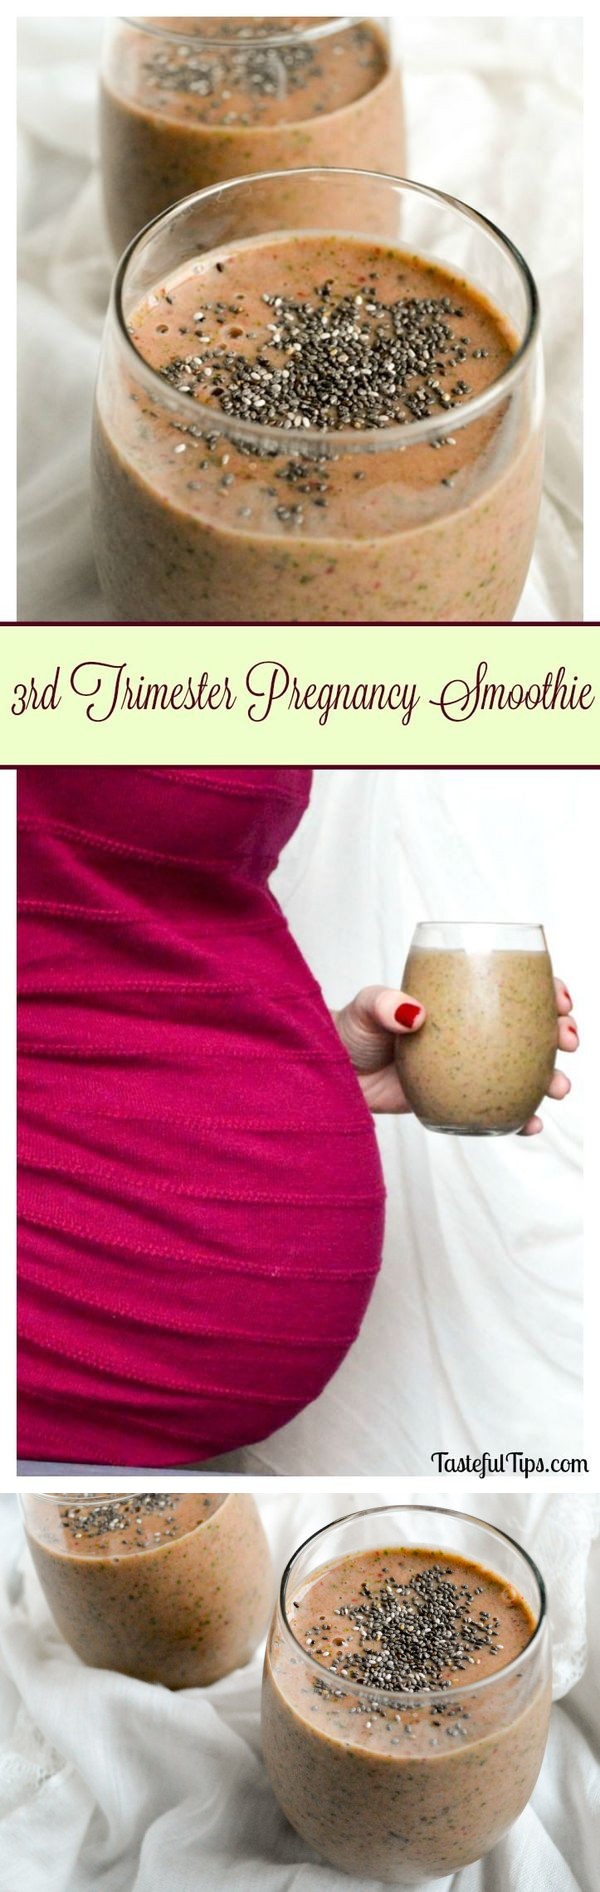 Third Trimester Pregnancy Smoothie